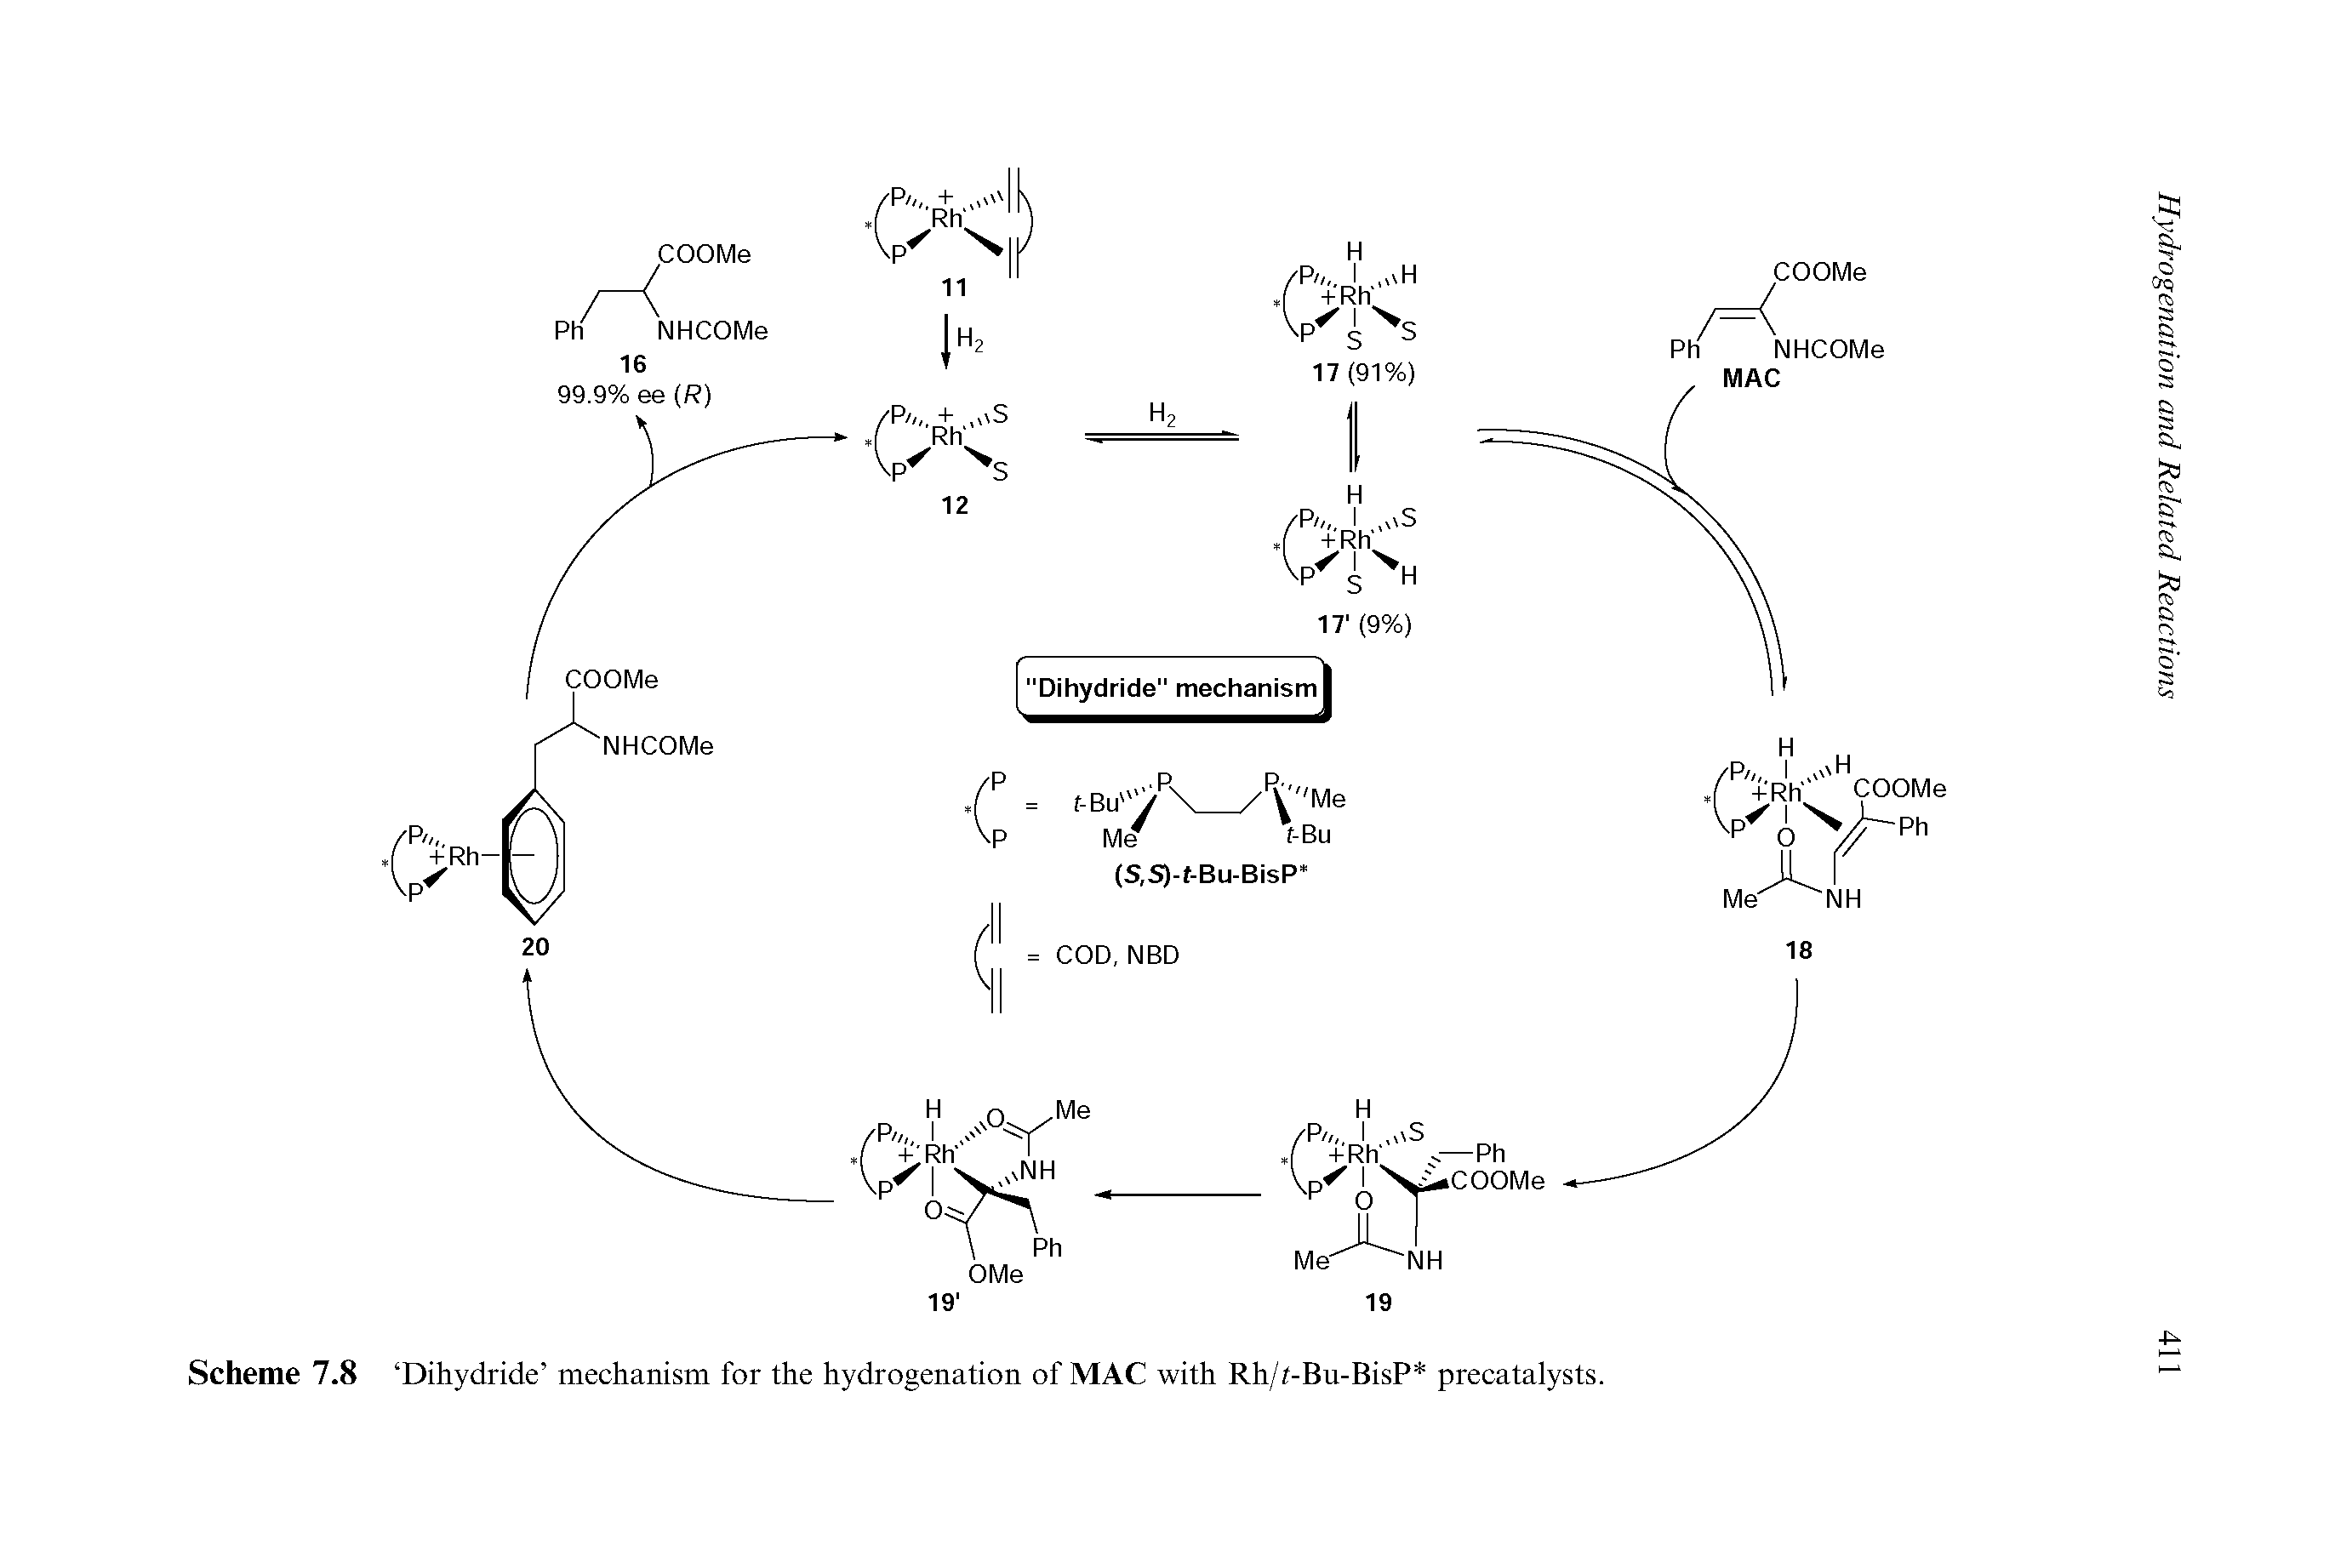 Scheme 7.8 Dihydride mechanism for the hydrogenation of MAC with Rh/t-Bu-BisP precatalysts.